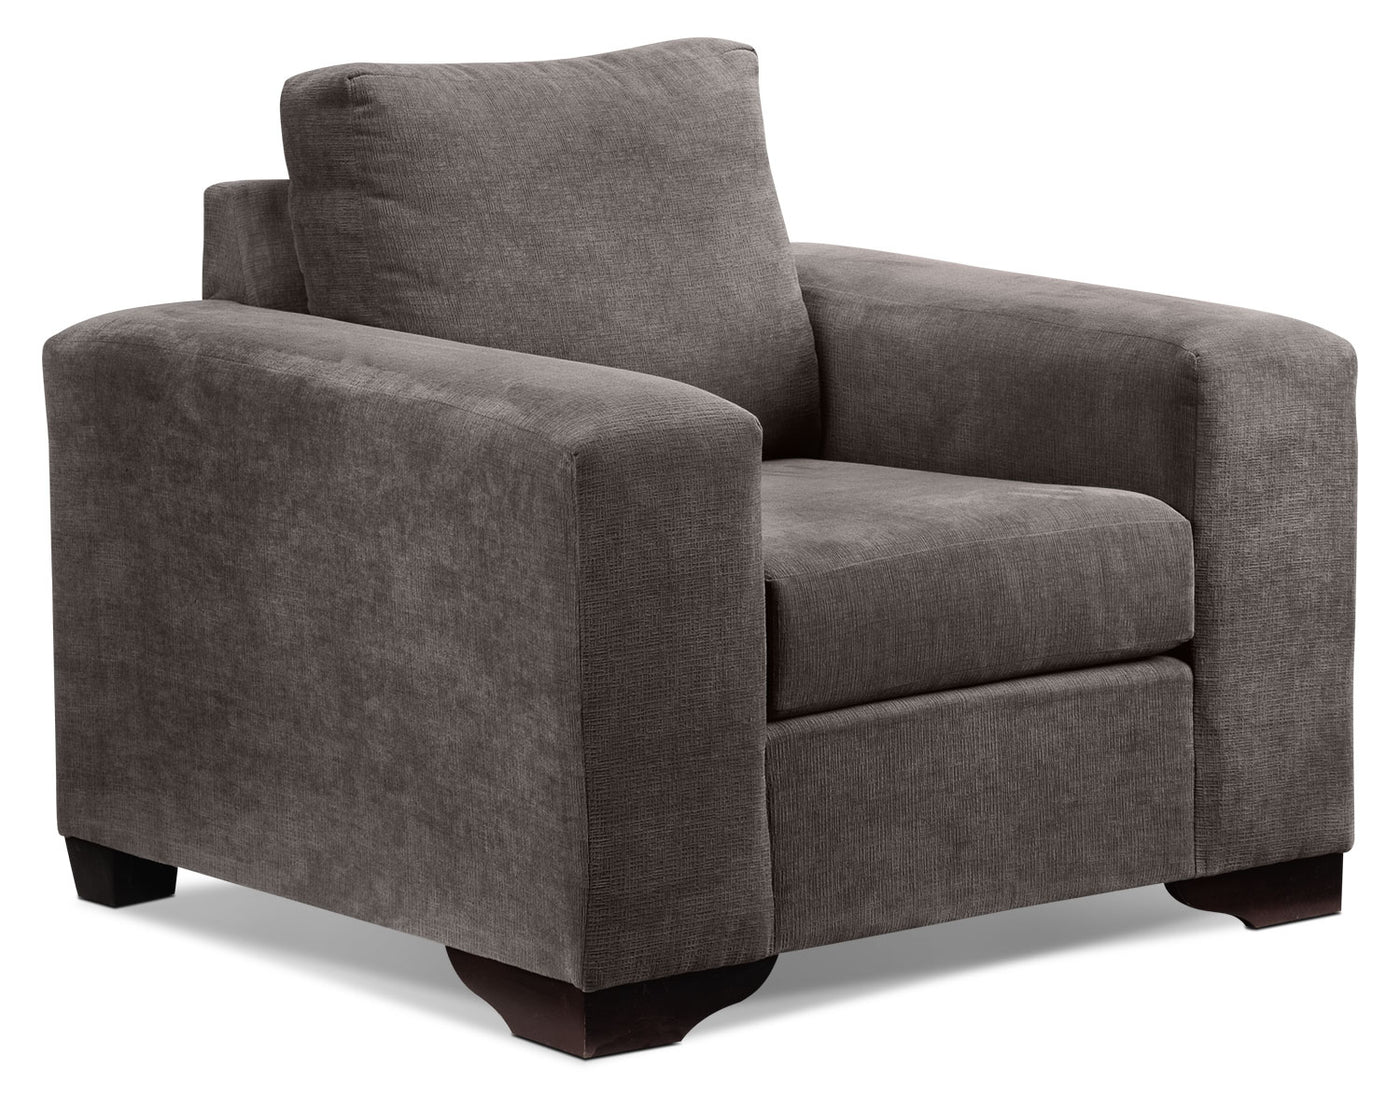 Fava Sofa and Chair Set - Grey